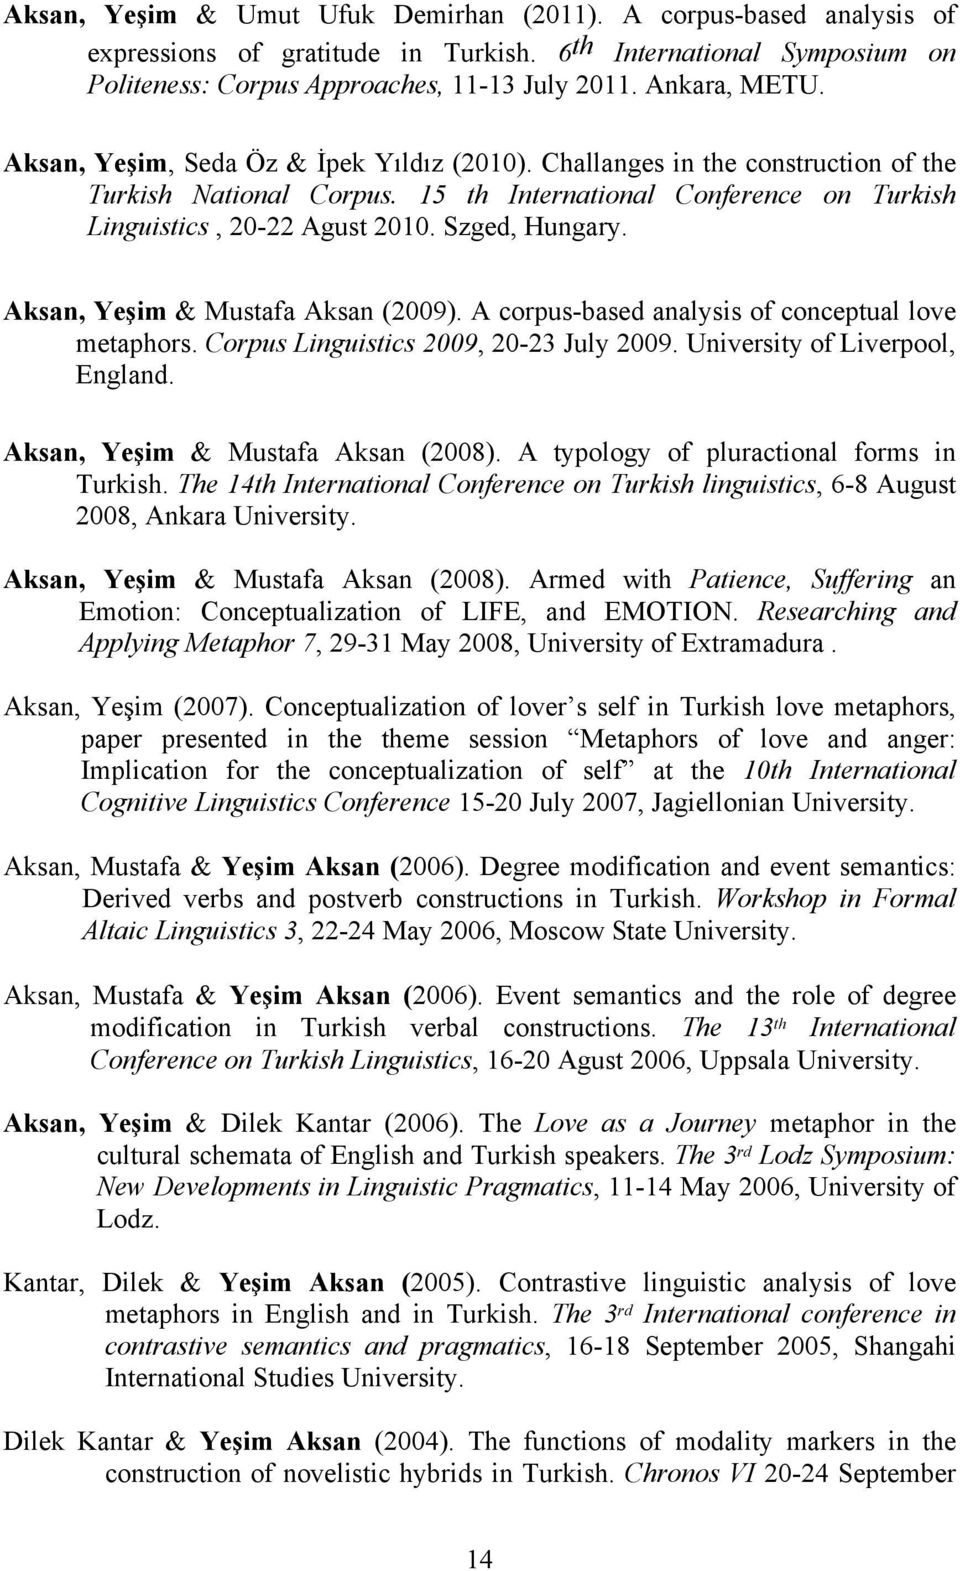 Aksan, Yeşim & Mustafa Aksan (2009). A corpus-based analysis of conceptual love metaphors. Corpus Linguistics 2009, 20-23 July 2009. University of Liverpool, England.